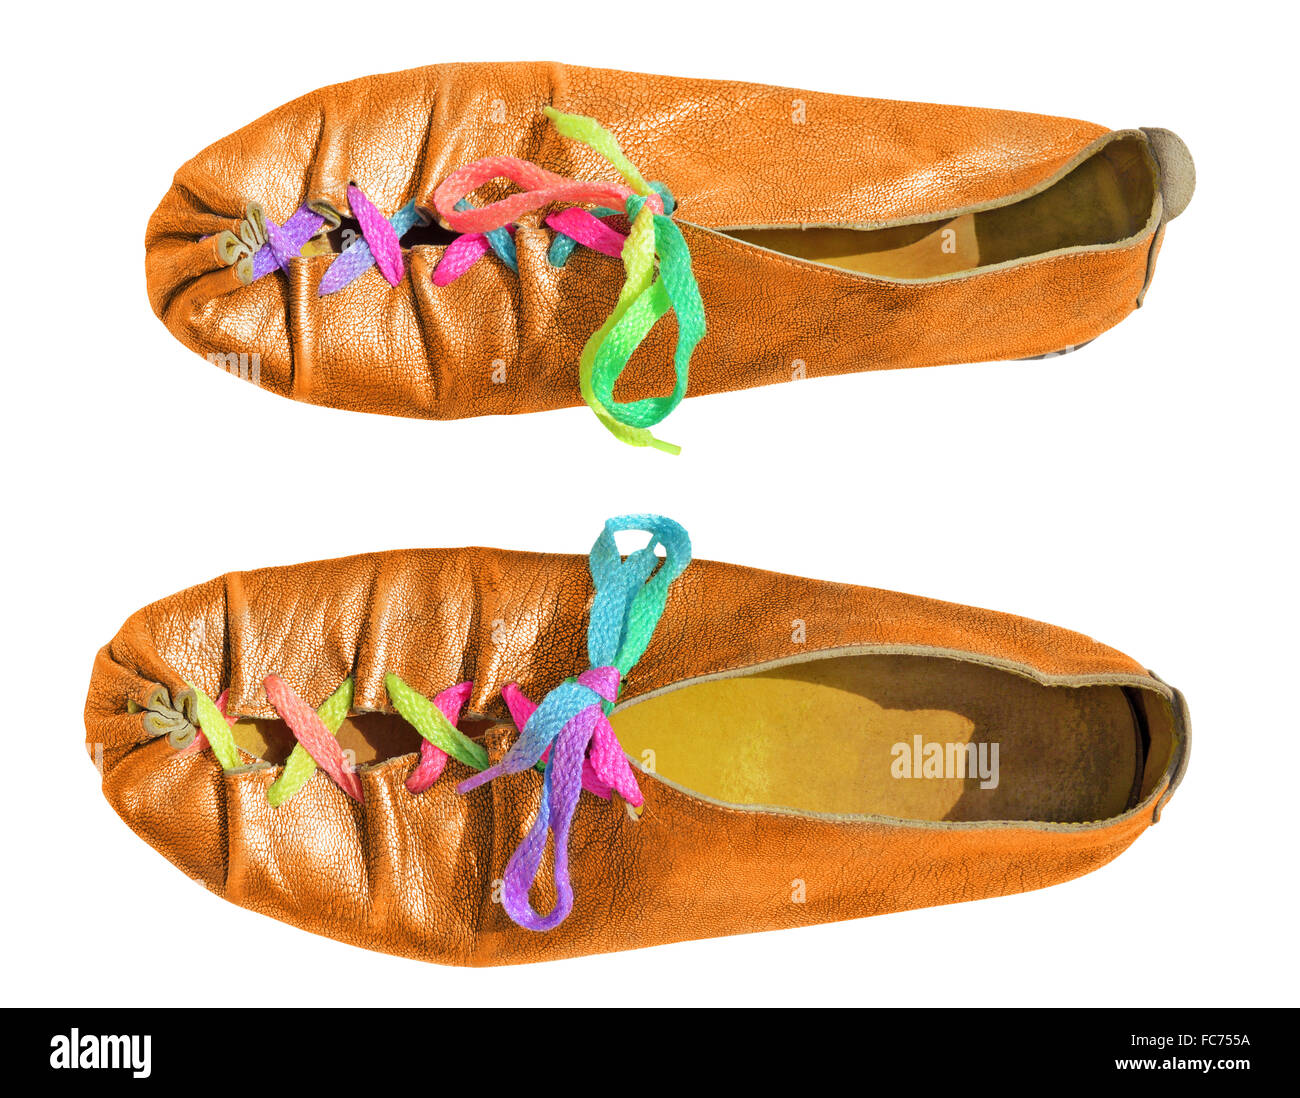 Ladies fun orange shoes Stock Photo - Alamy